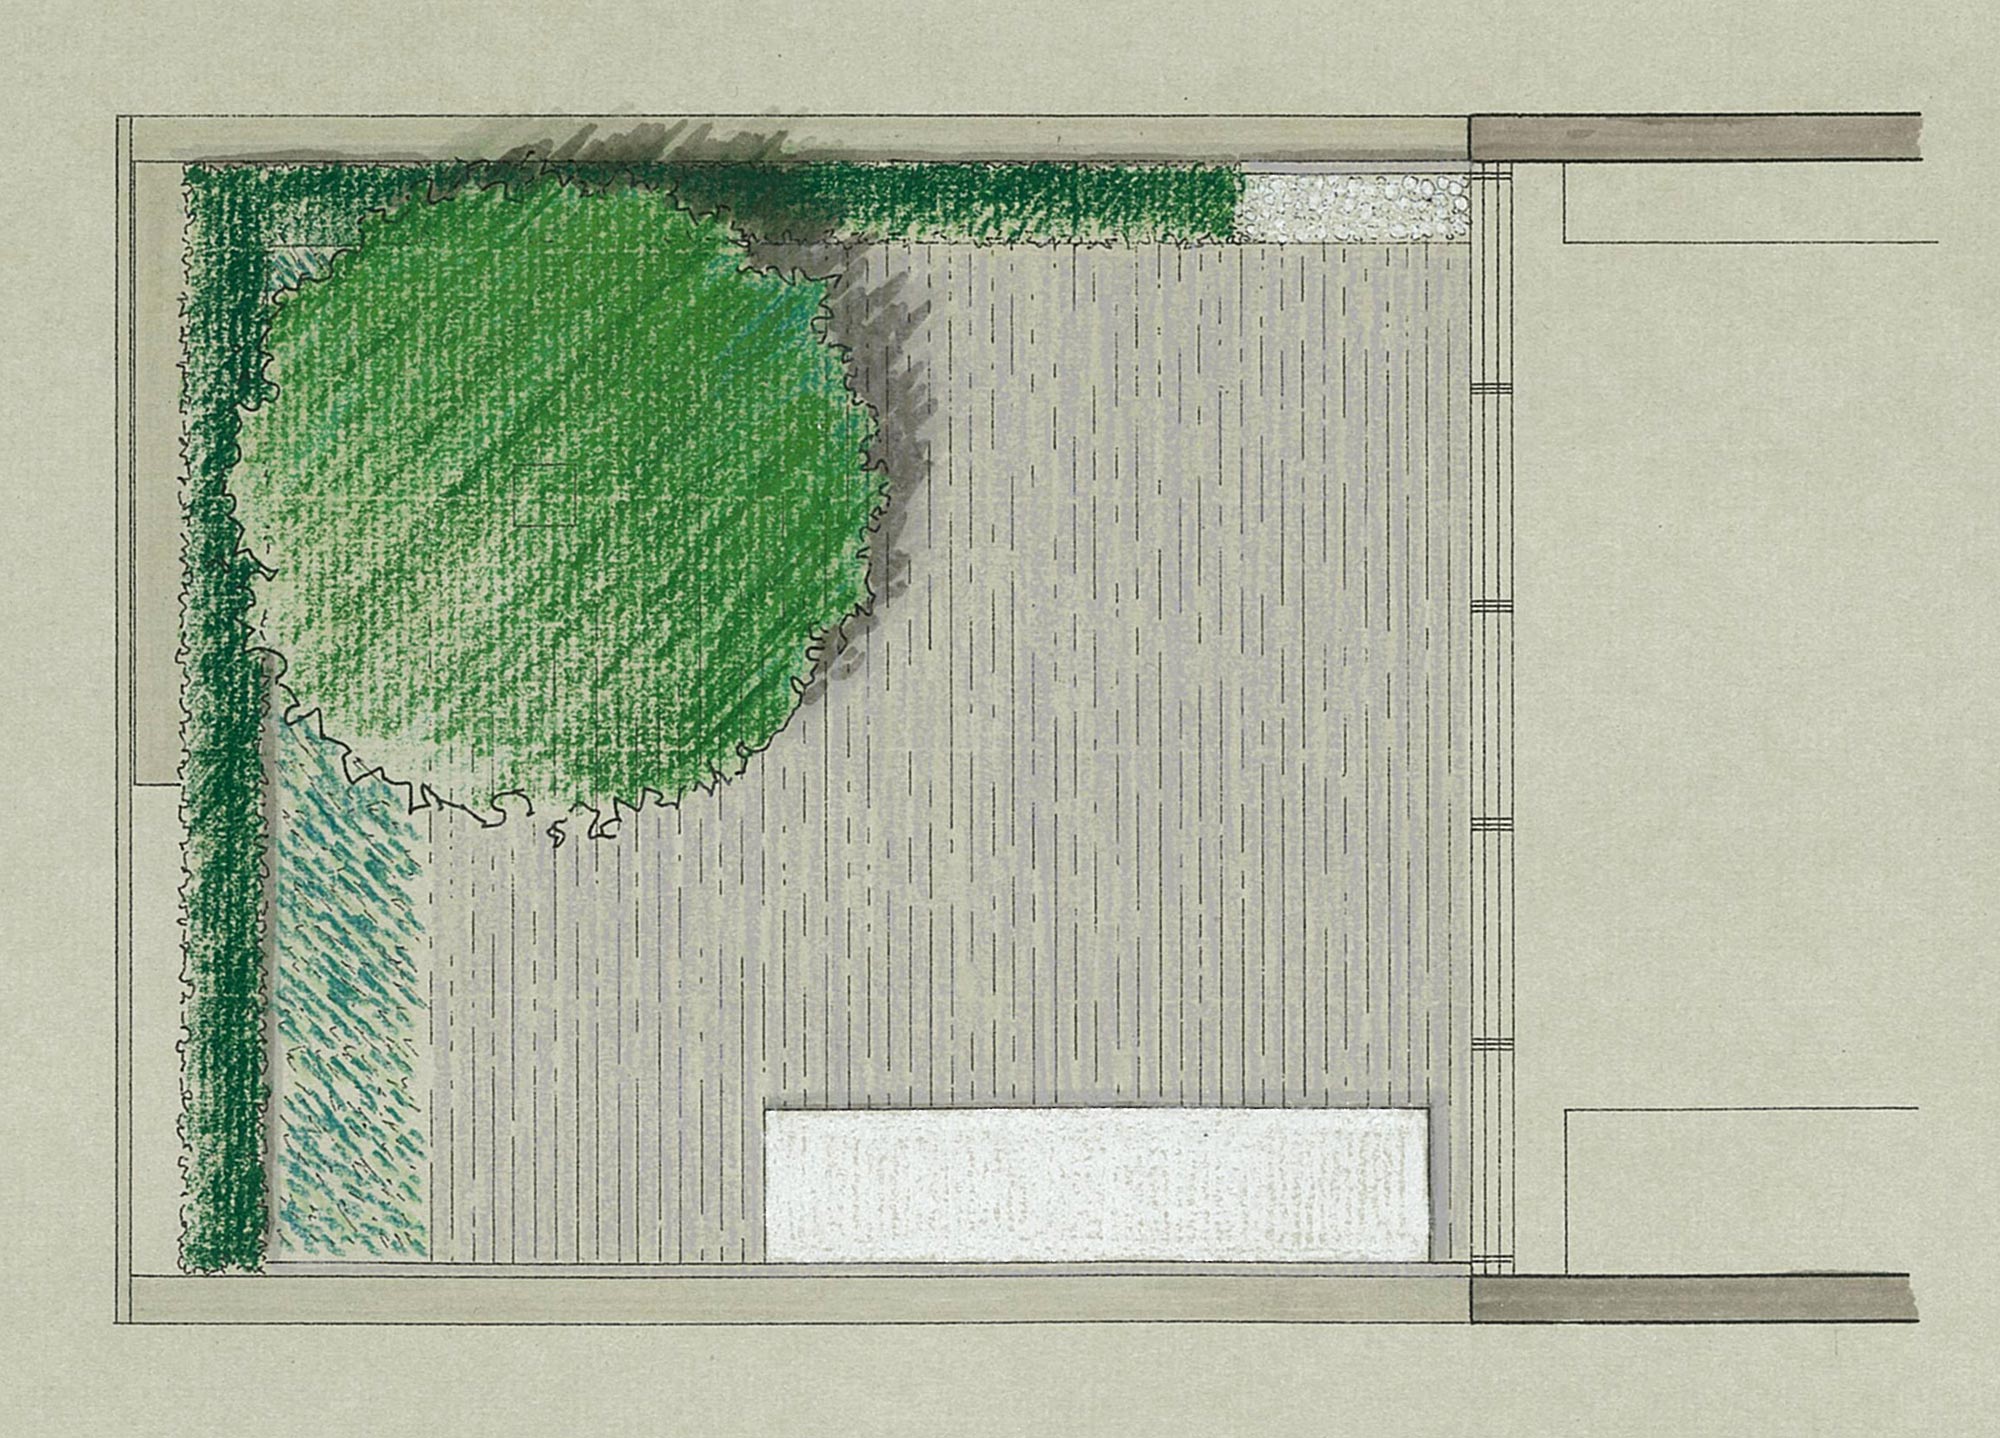 Fulham Courtyard drawing and plan - James Aldridge Landscape and Garden Design